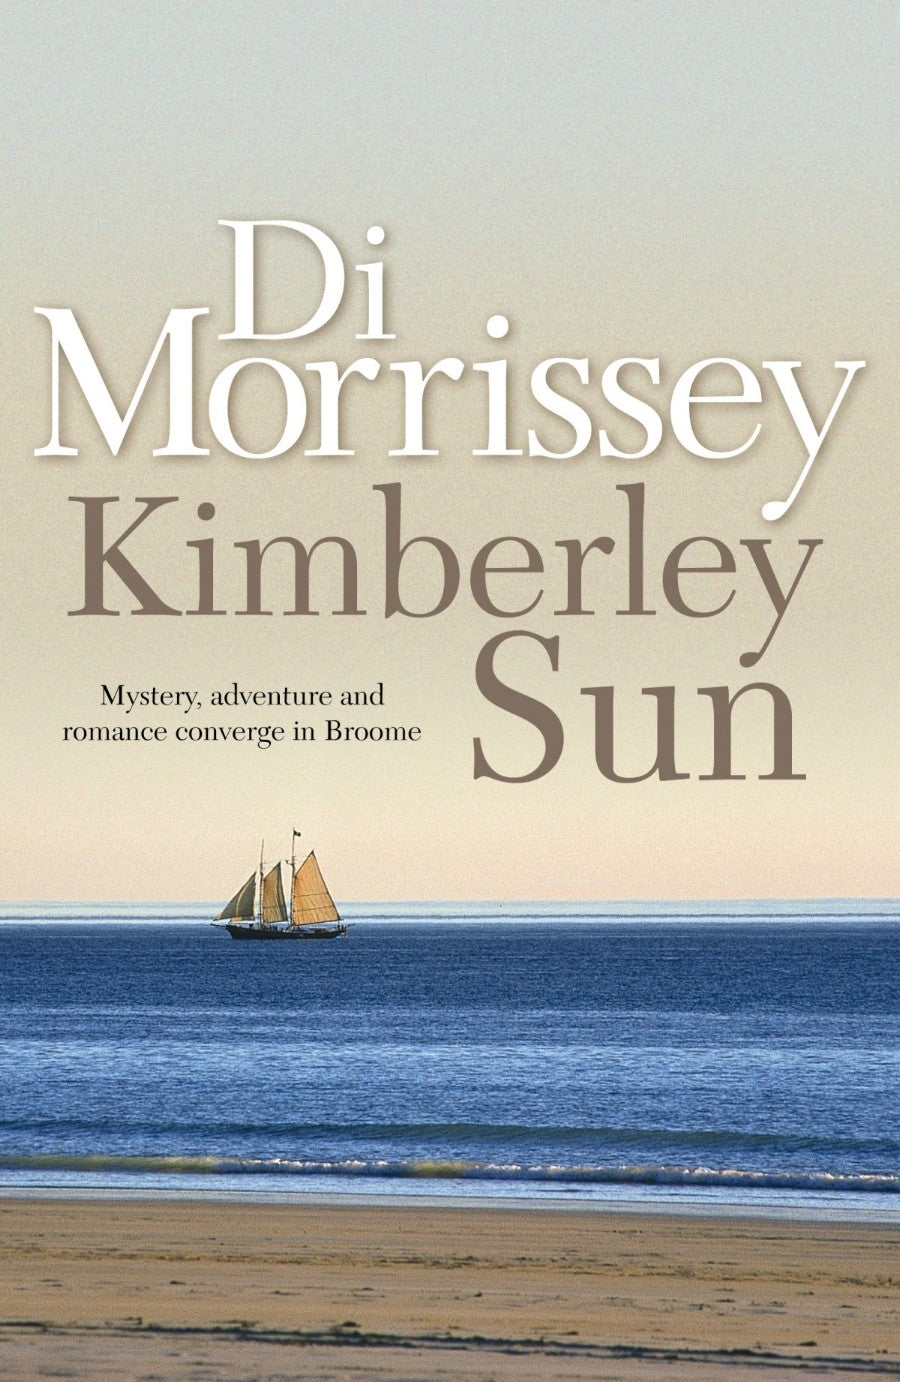 Kimberley Sun